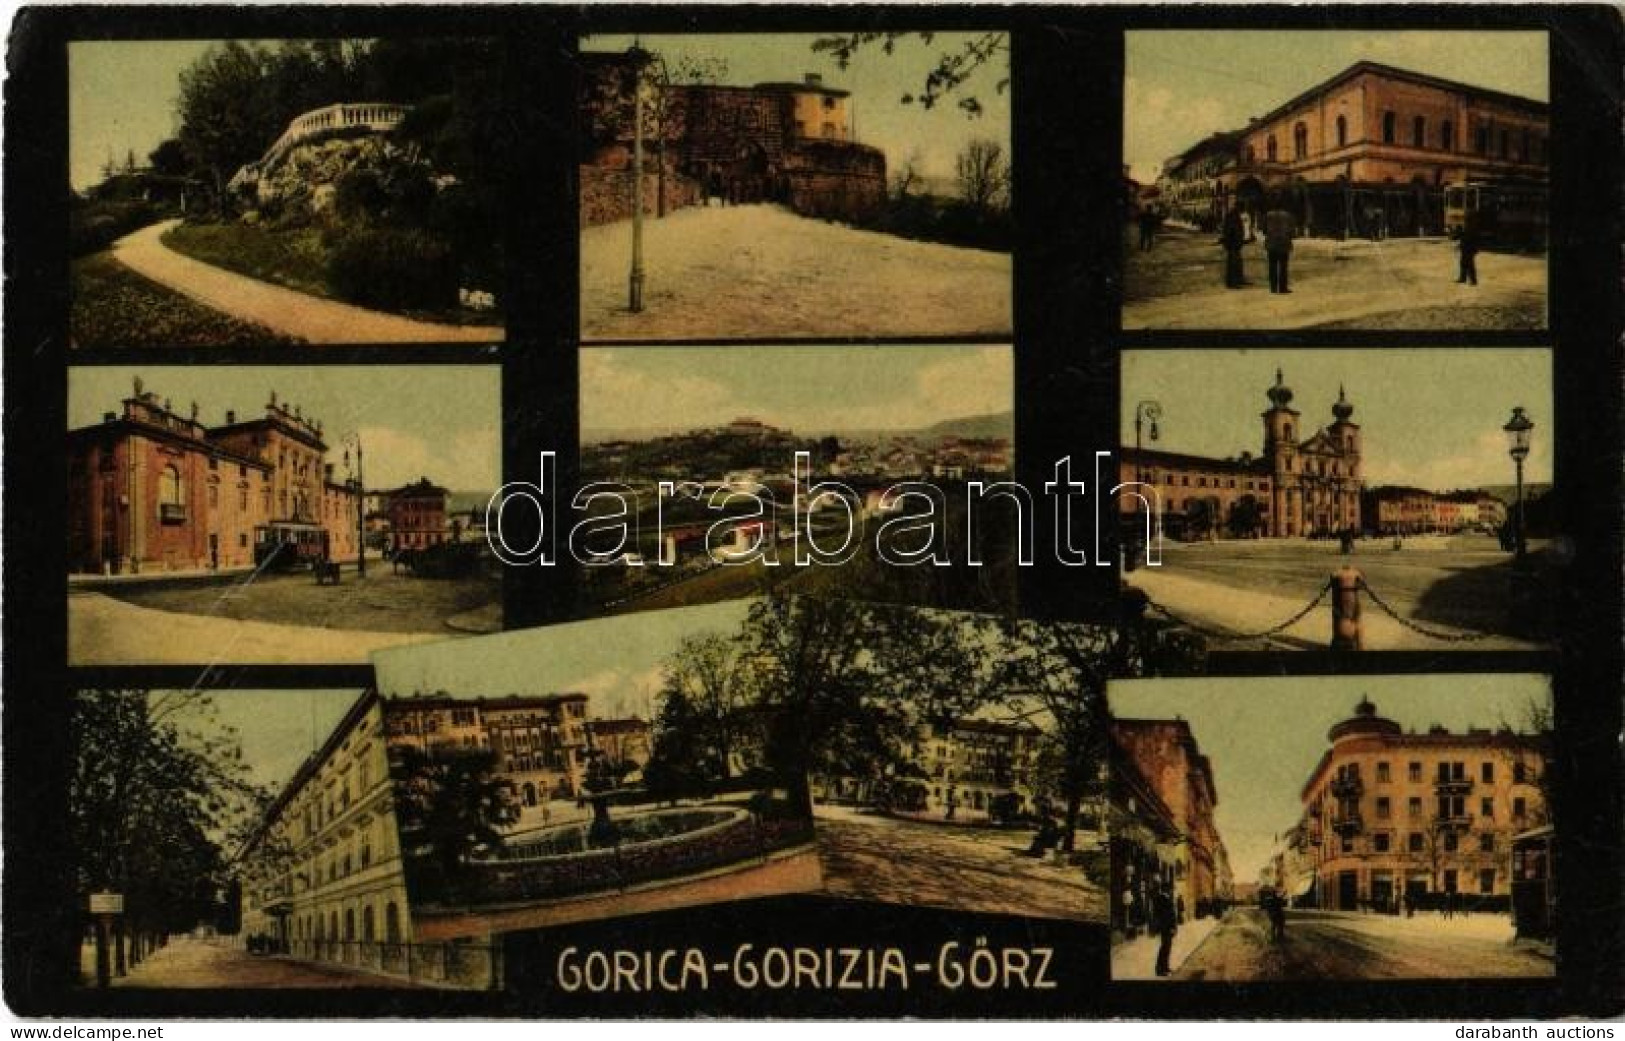 T2/T3 1915 Gorizia, Görz, Gorica; Multi-view Postcard, Street Views With Tram, Railway Station, Cathedral, Castle (EK) - Unclassified